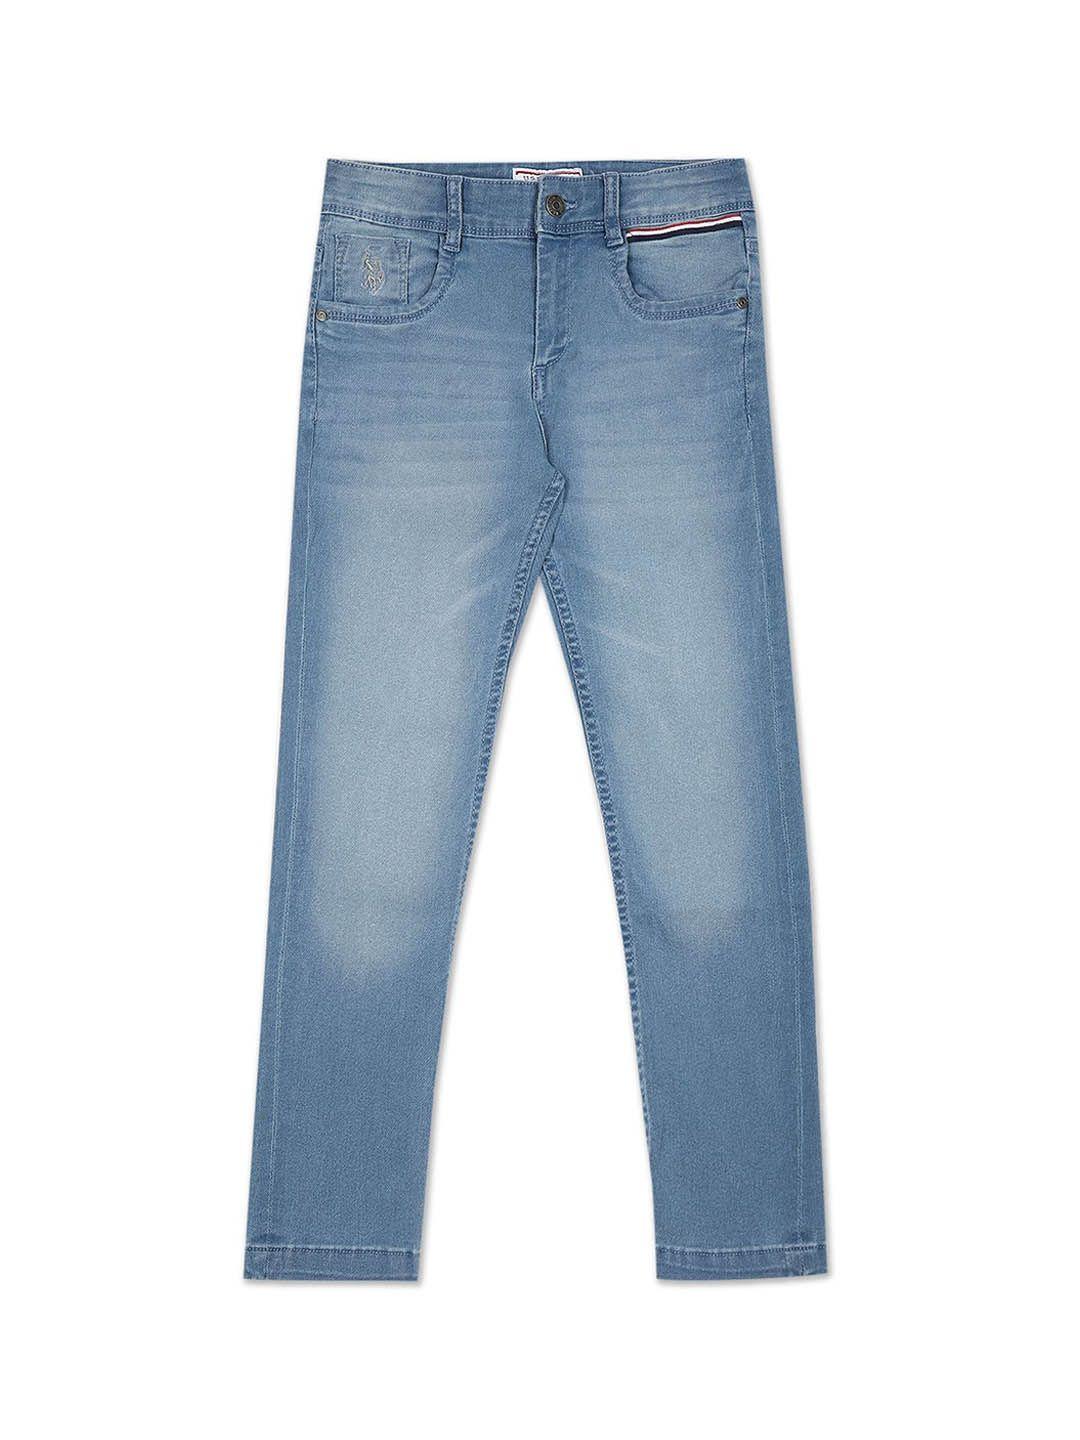 u.s. polo assn. kids boys skinny fit light fade stretchable jeans